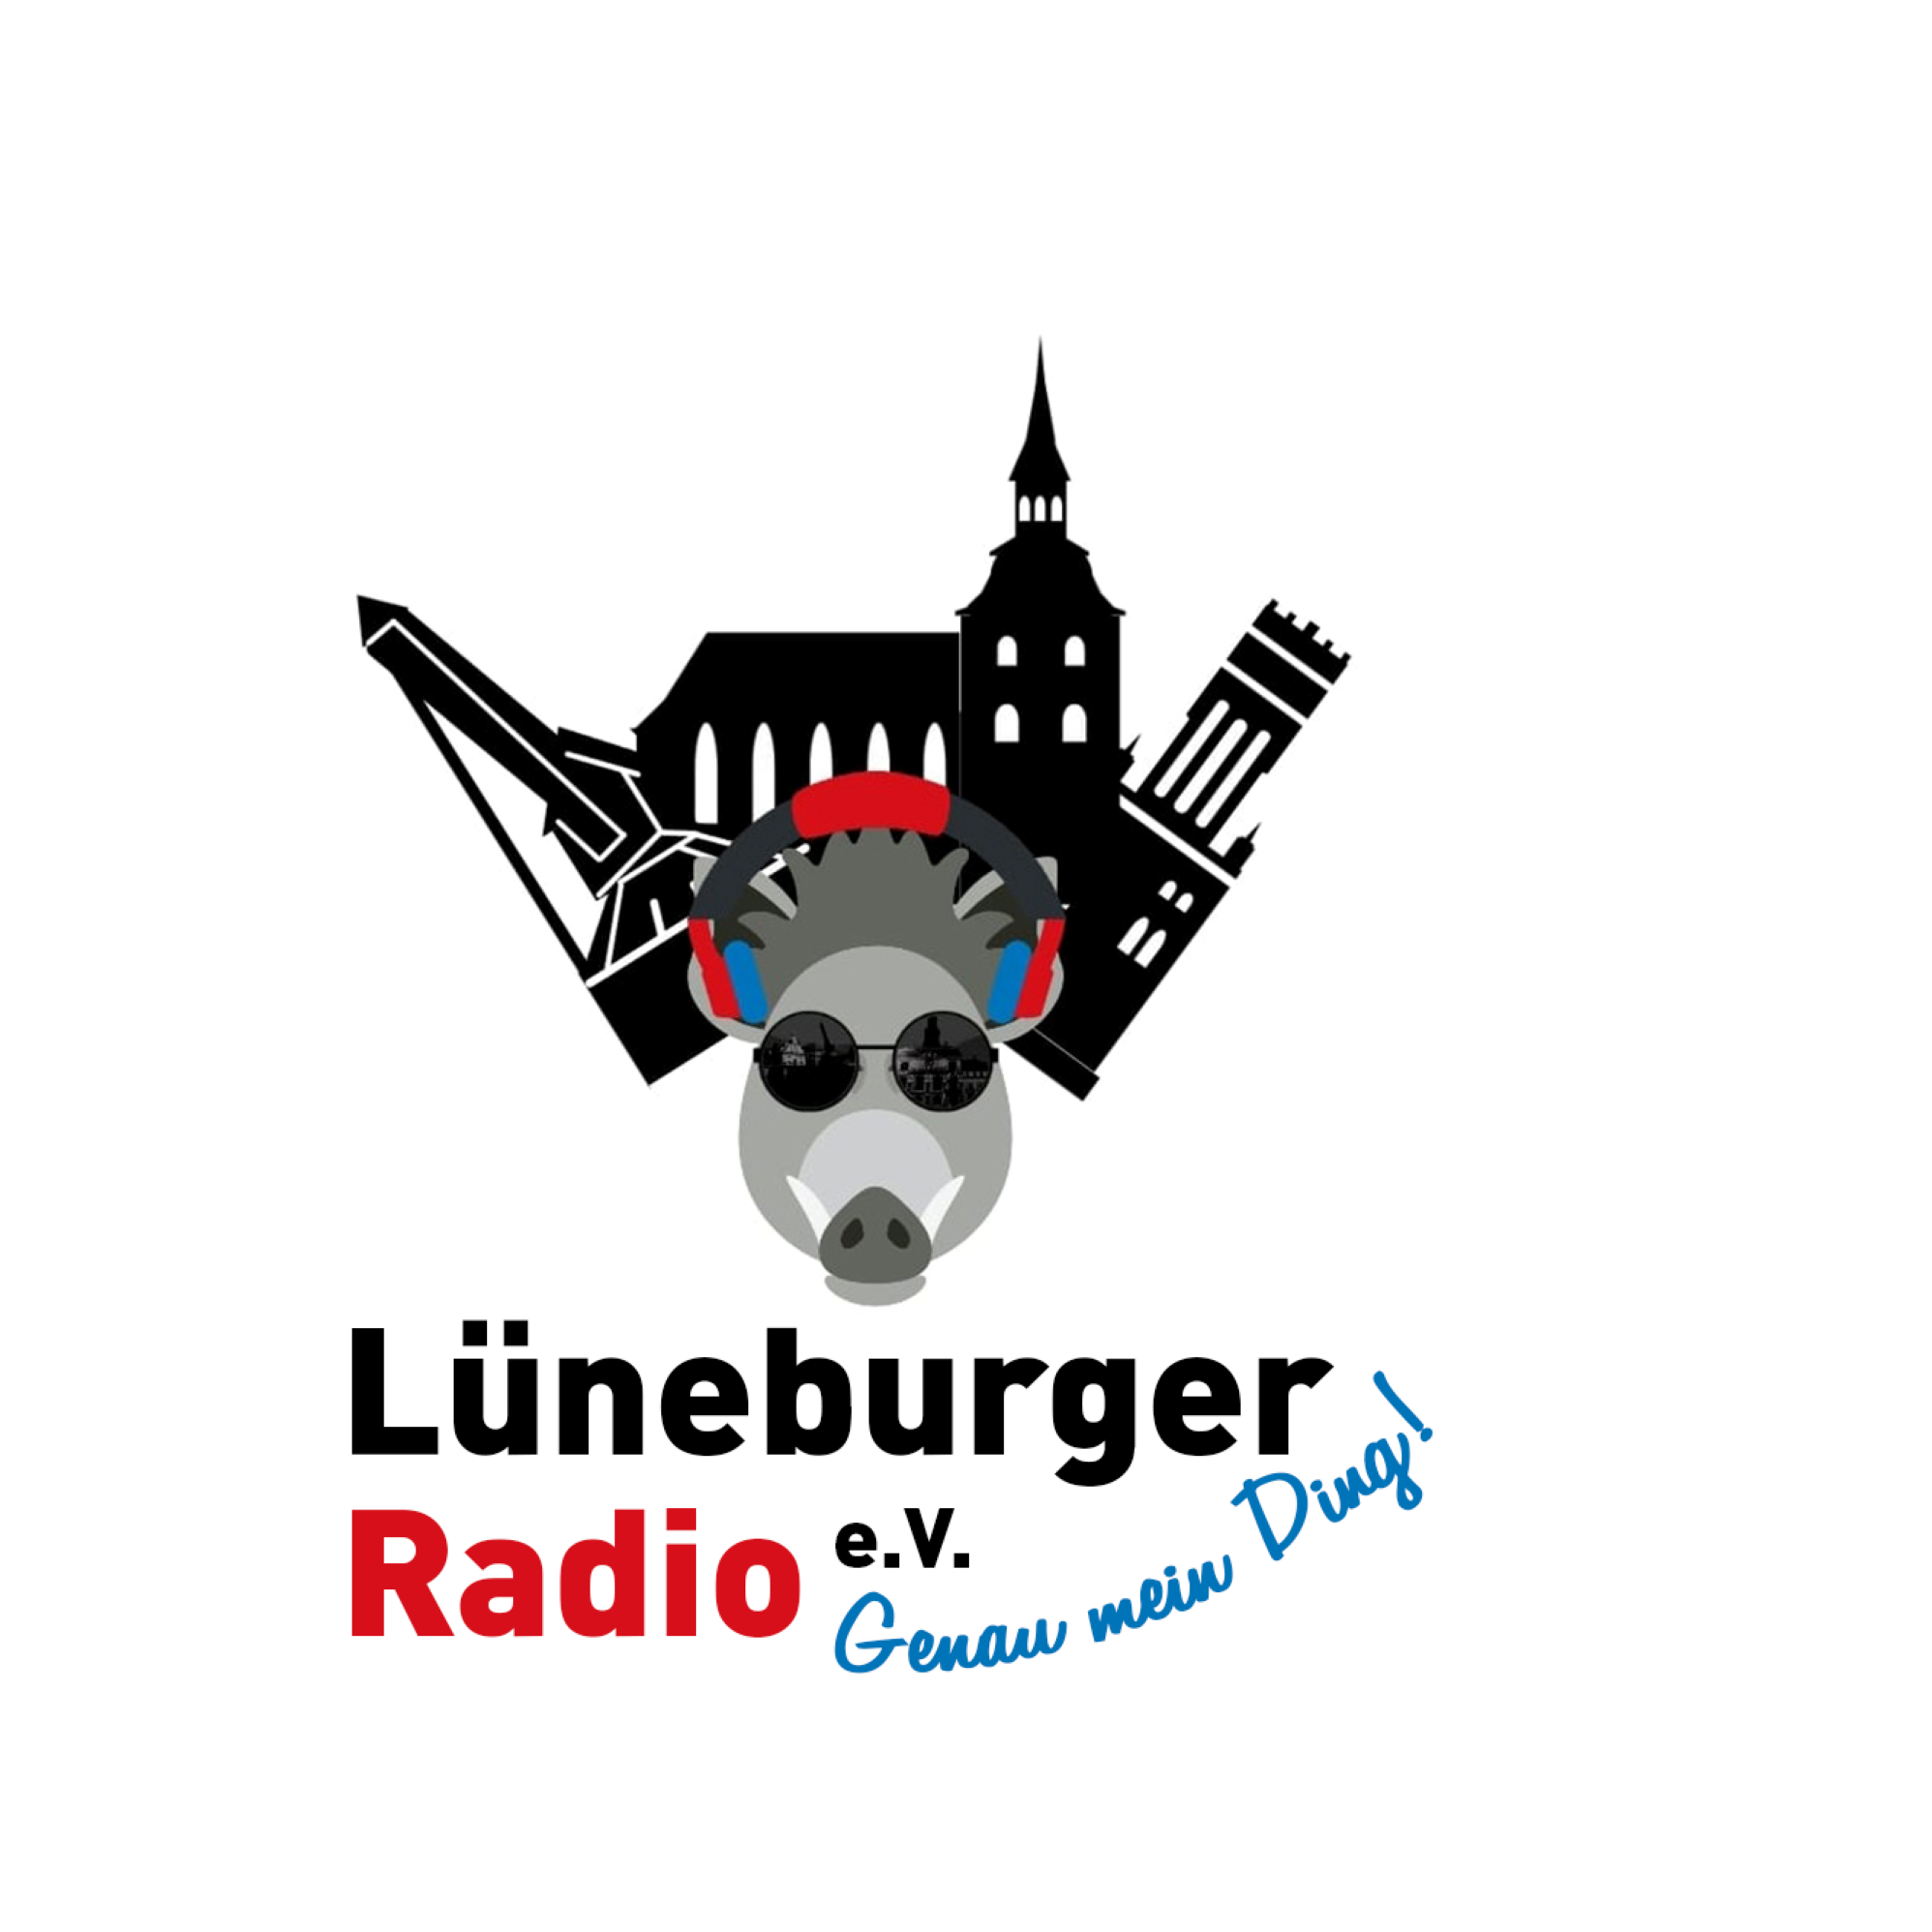 Radio Lueneburg